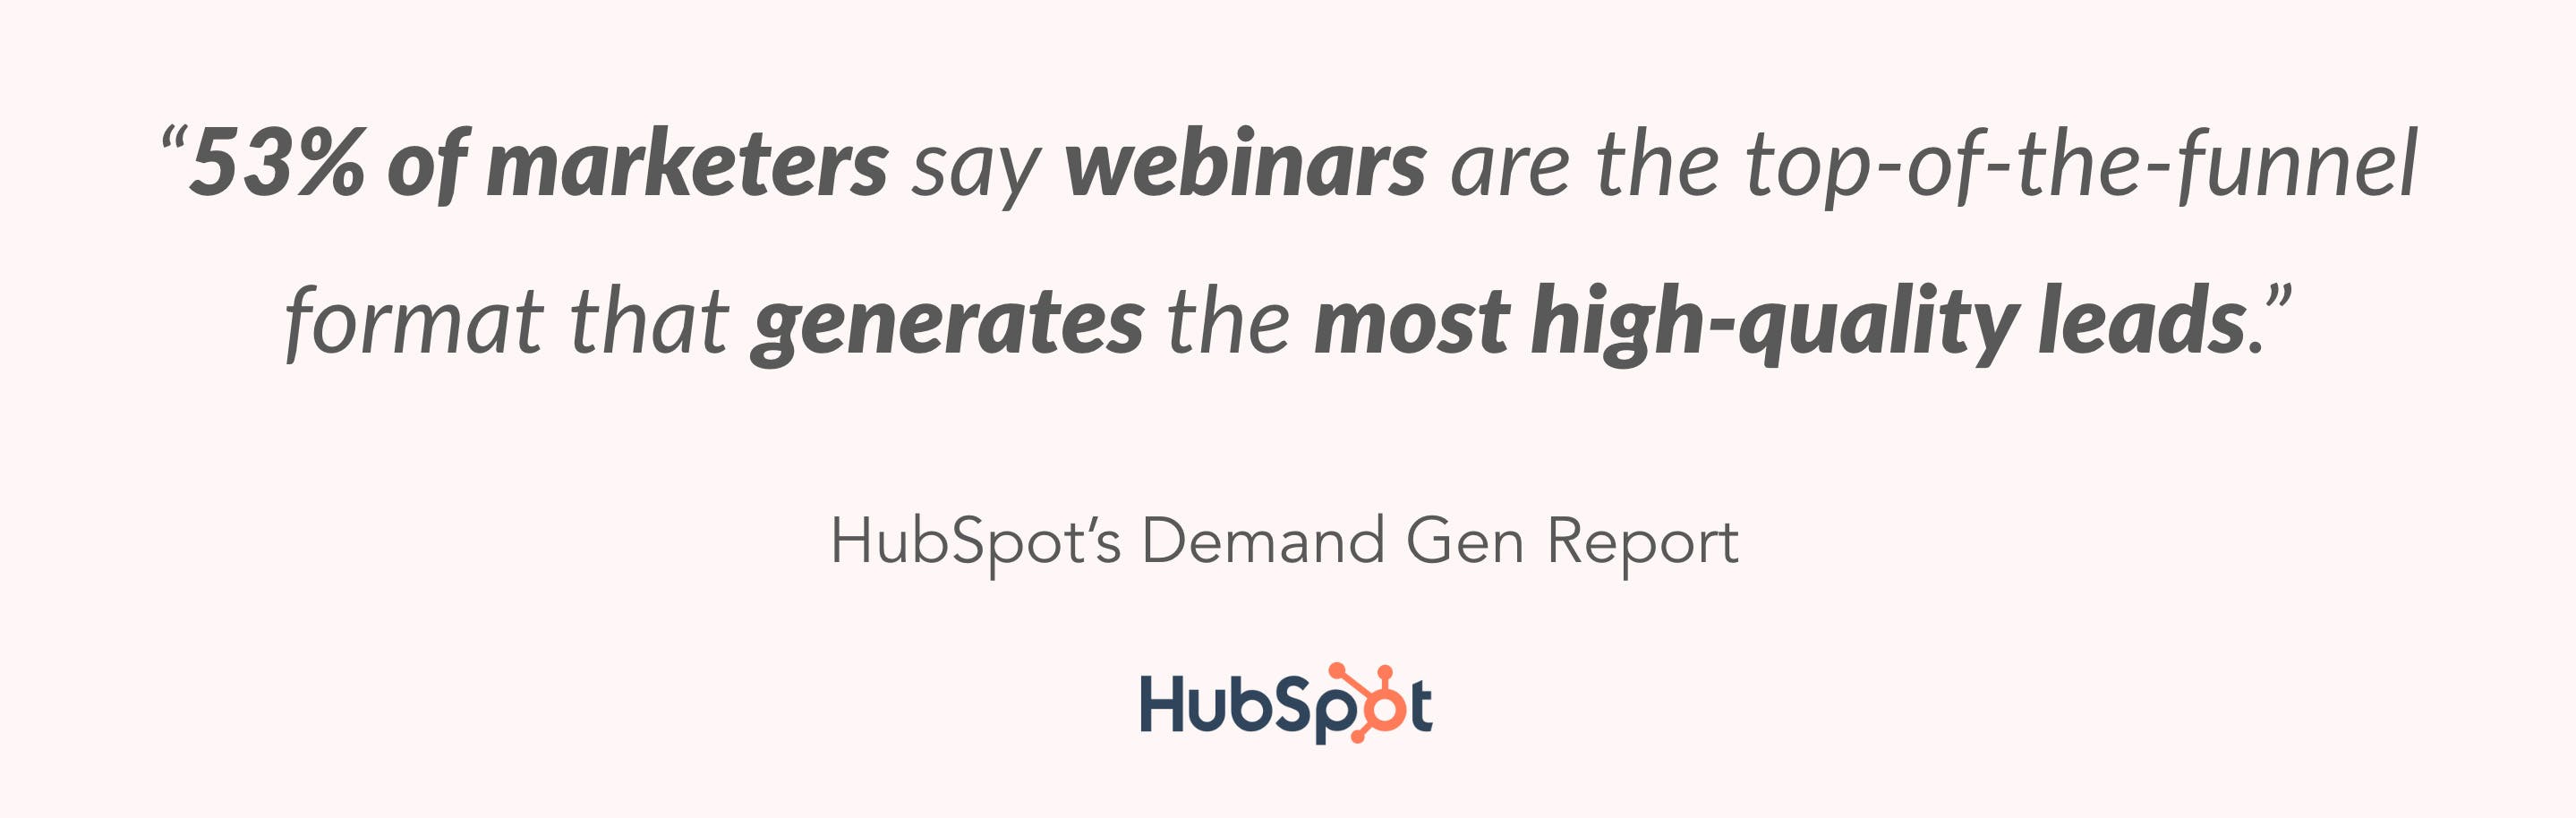 HubSpot Demand Gen Report - Statistics about webinars as top of funnel format